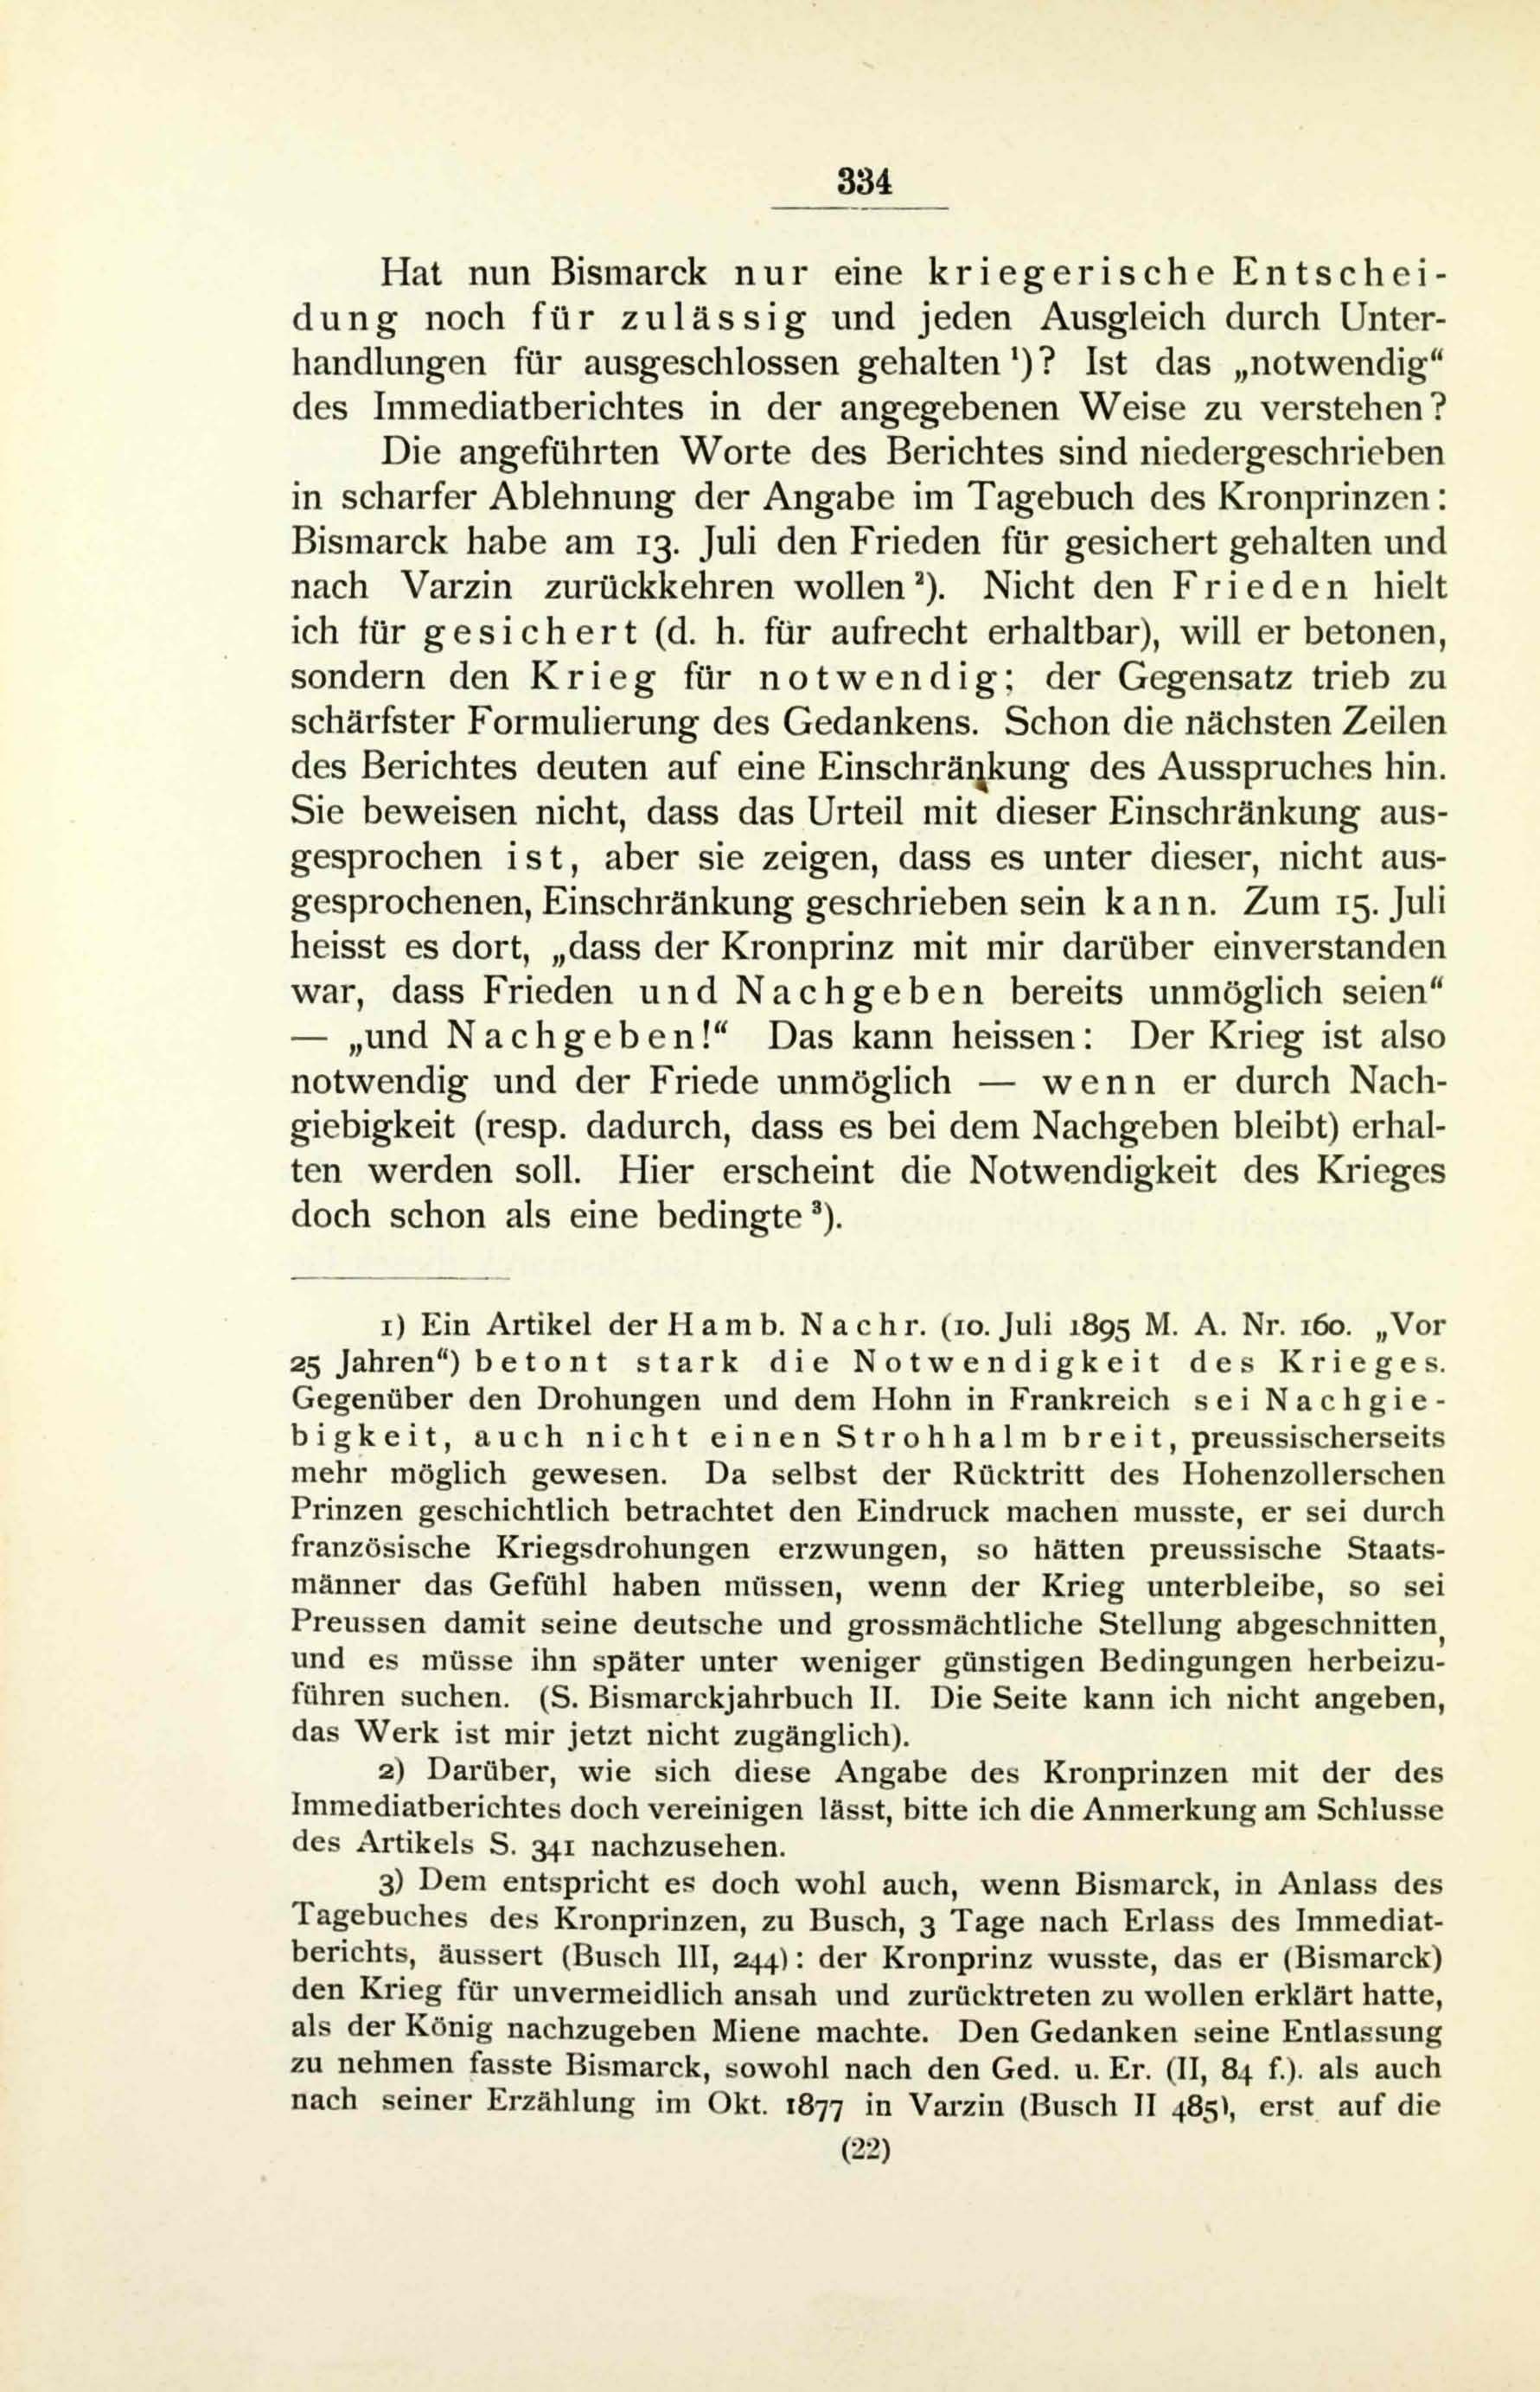 Die Zeddelmannsche Privat-Lehranstalt (1900) | 339. (334) Основной текст